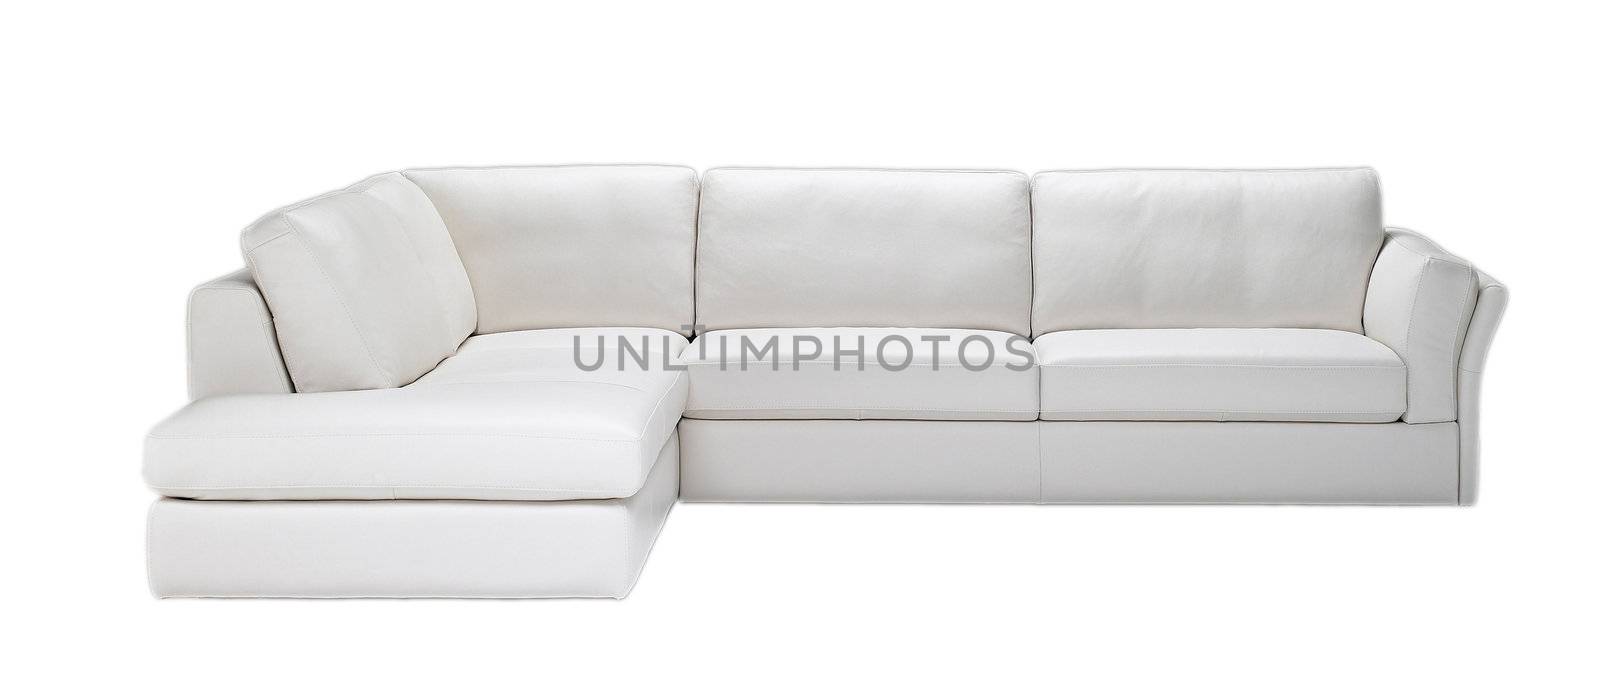 white leather sofa isolated against white background